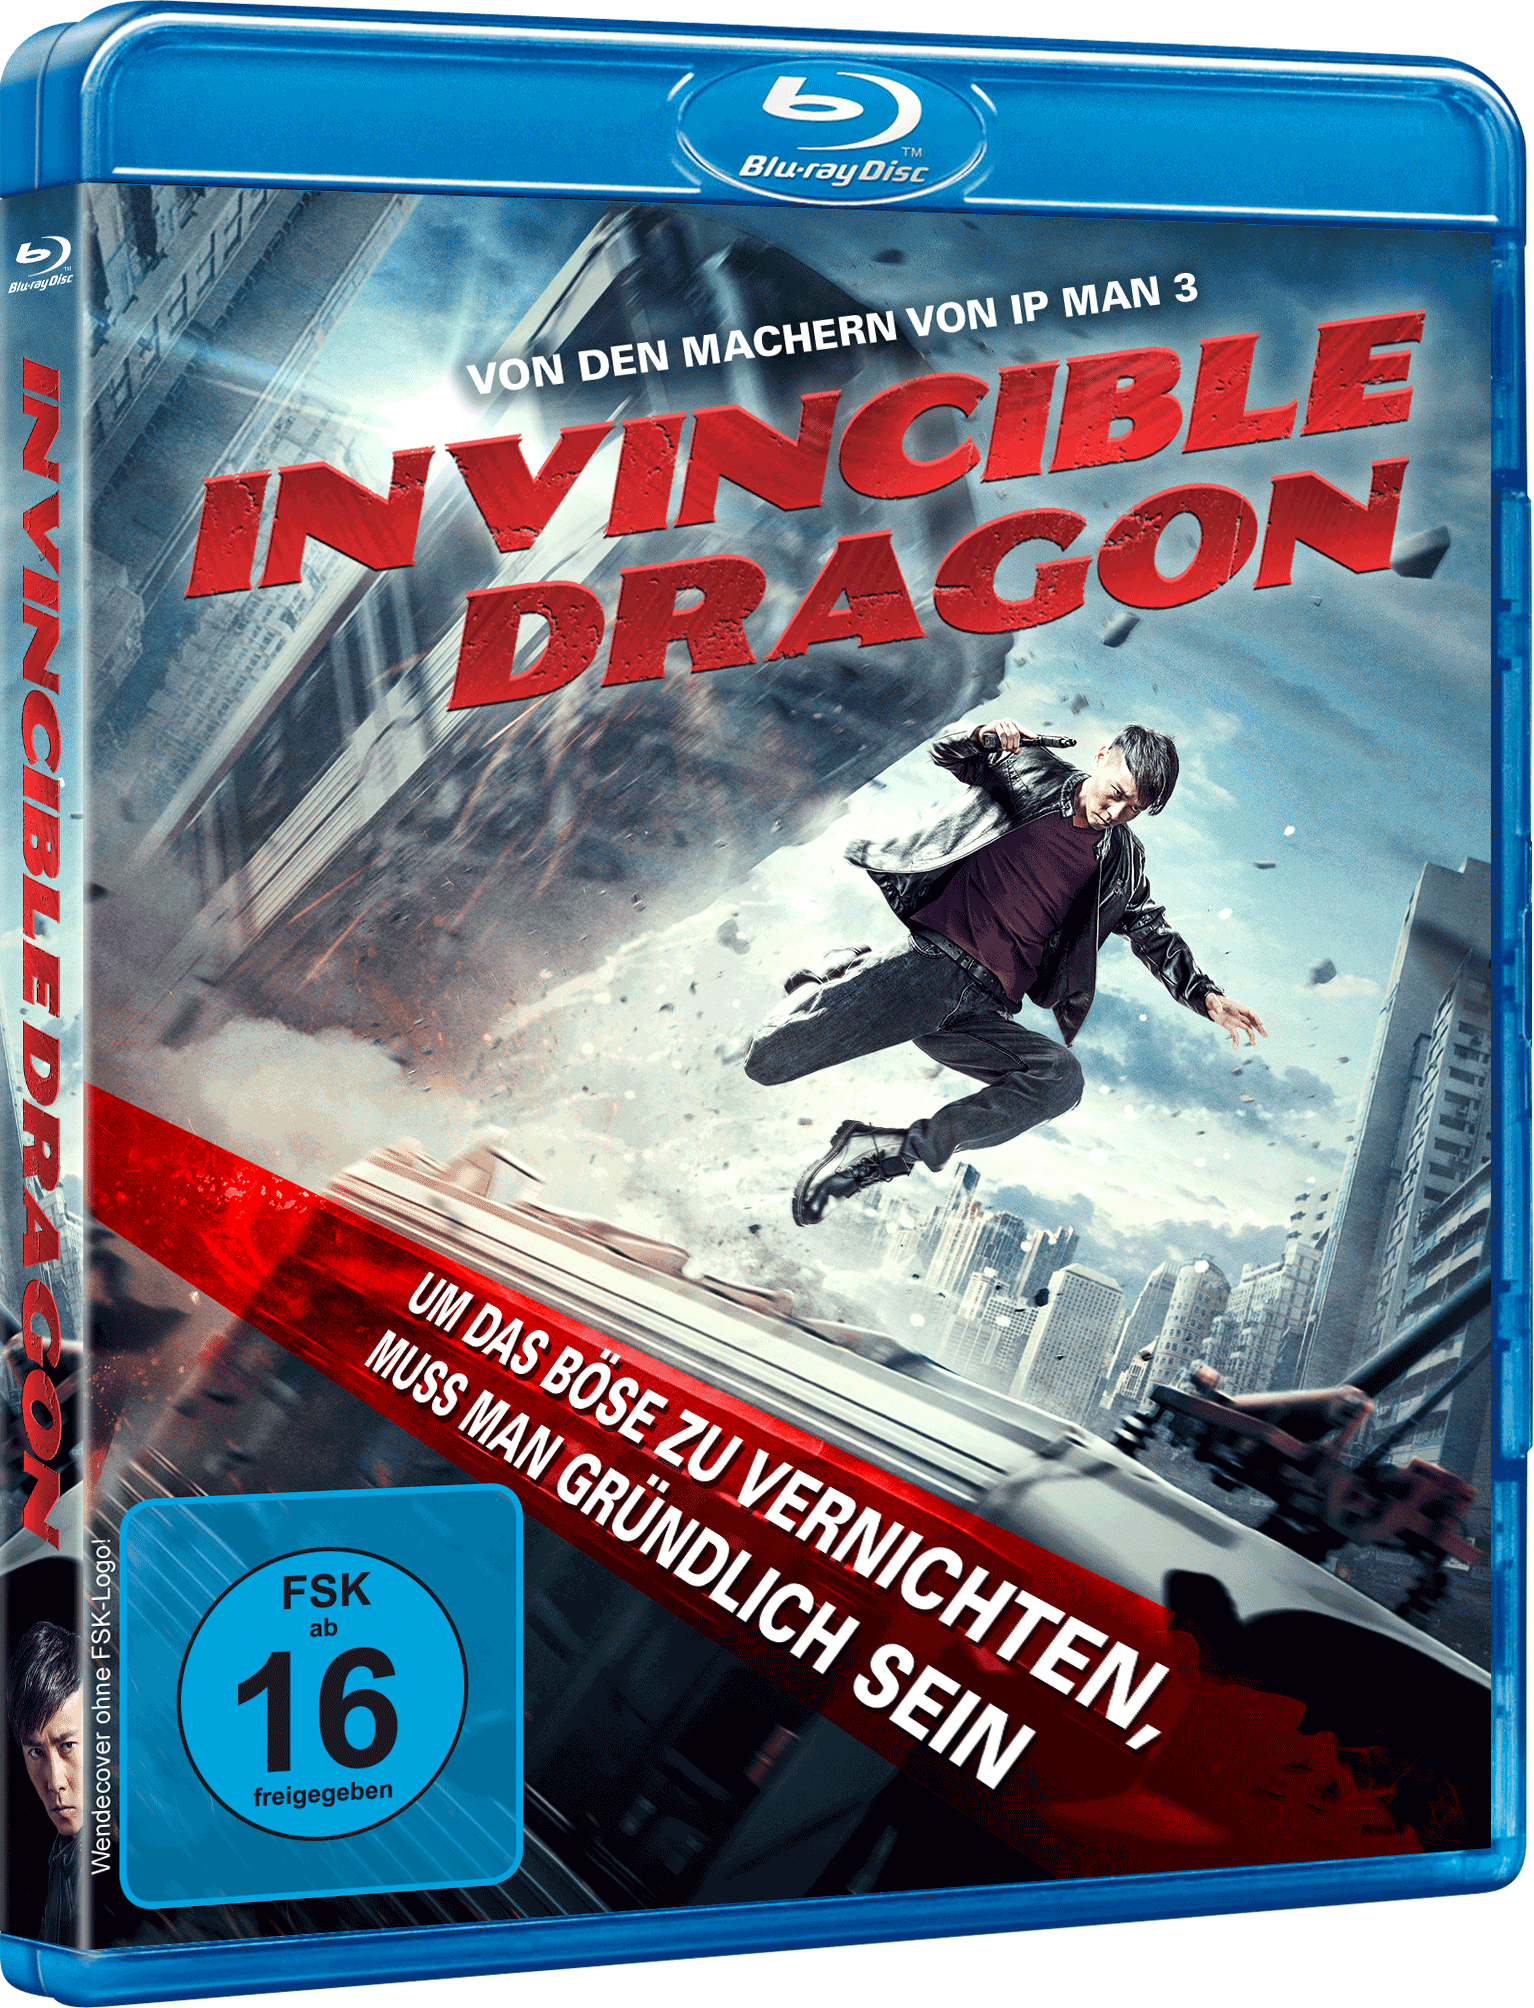 Invincible Dragon (Blu-ray)  Image 2